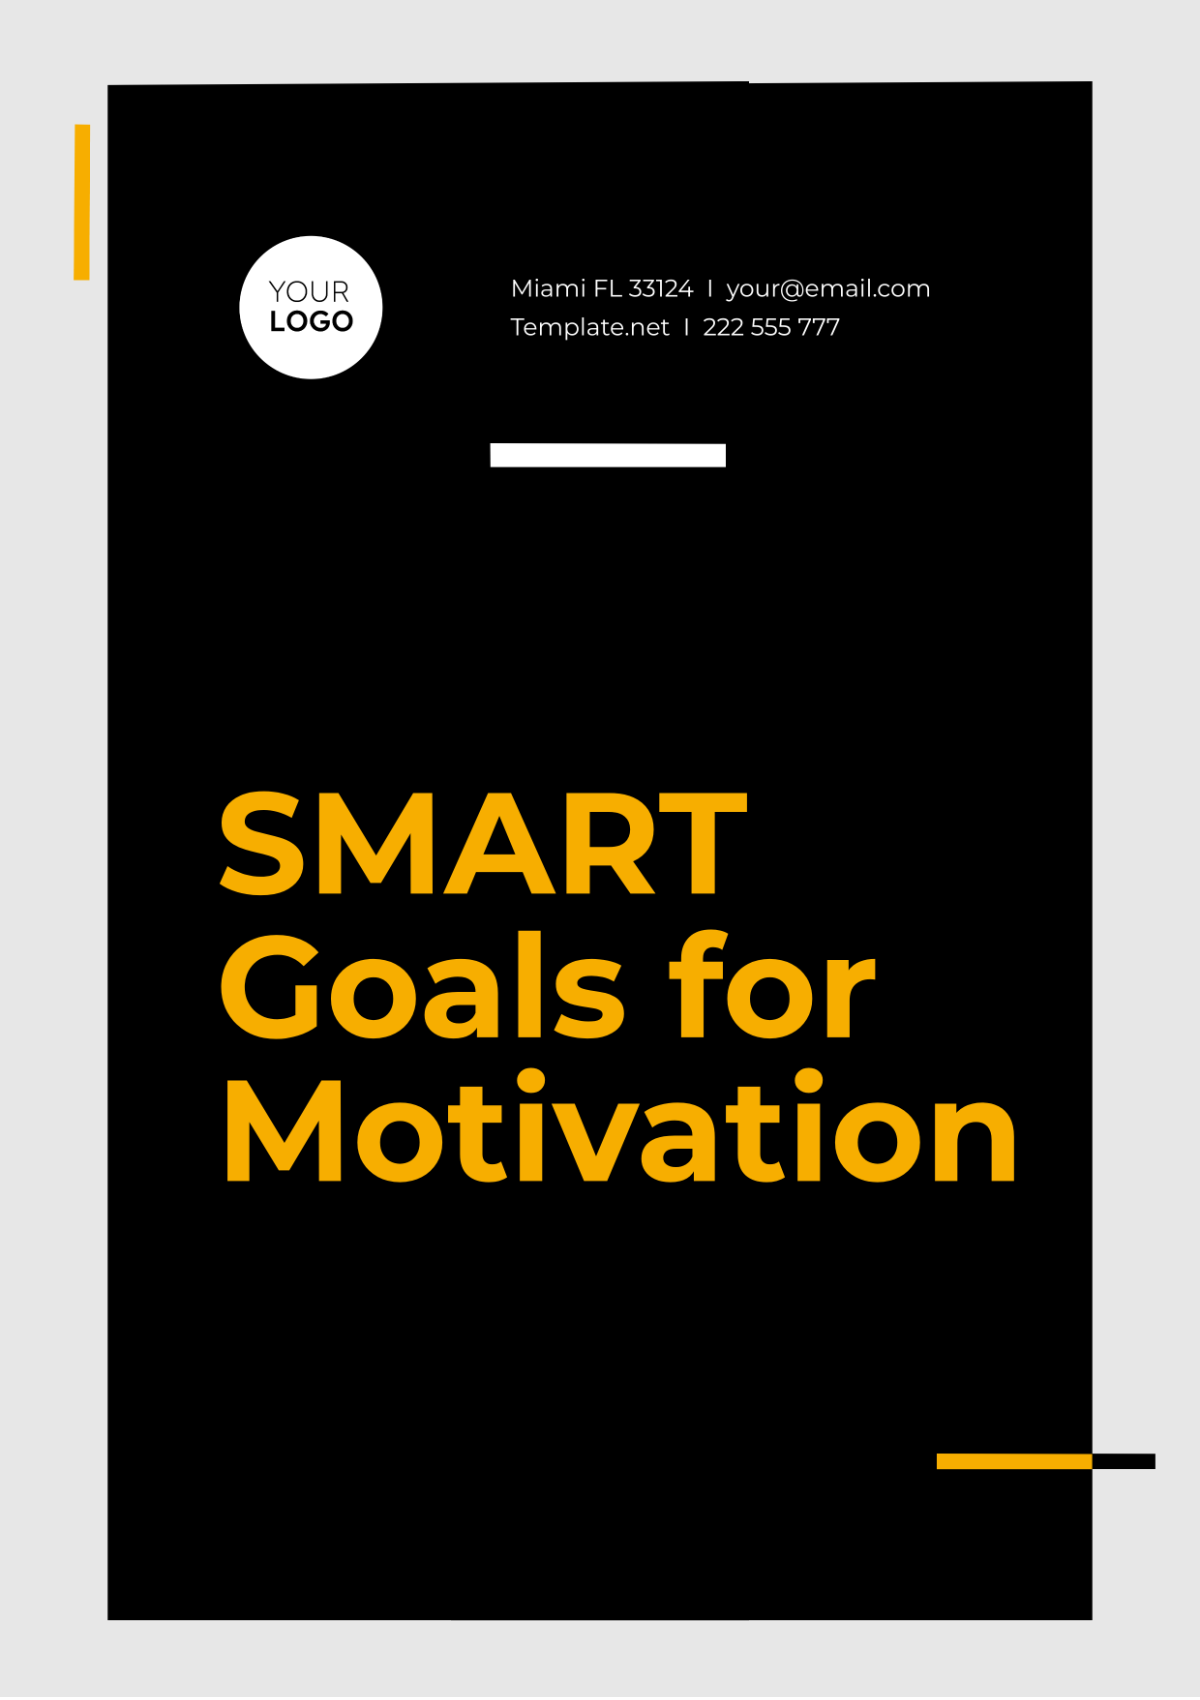 SMART Goals Template for Motivation